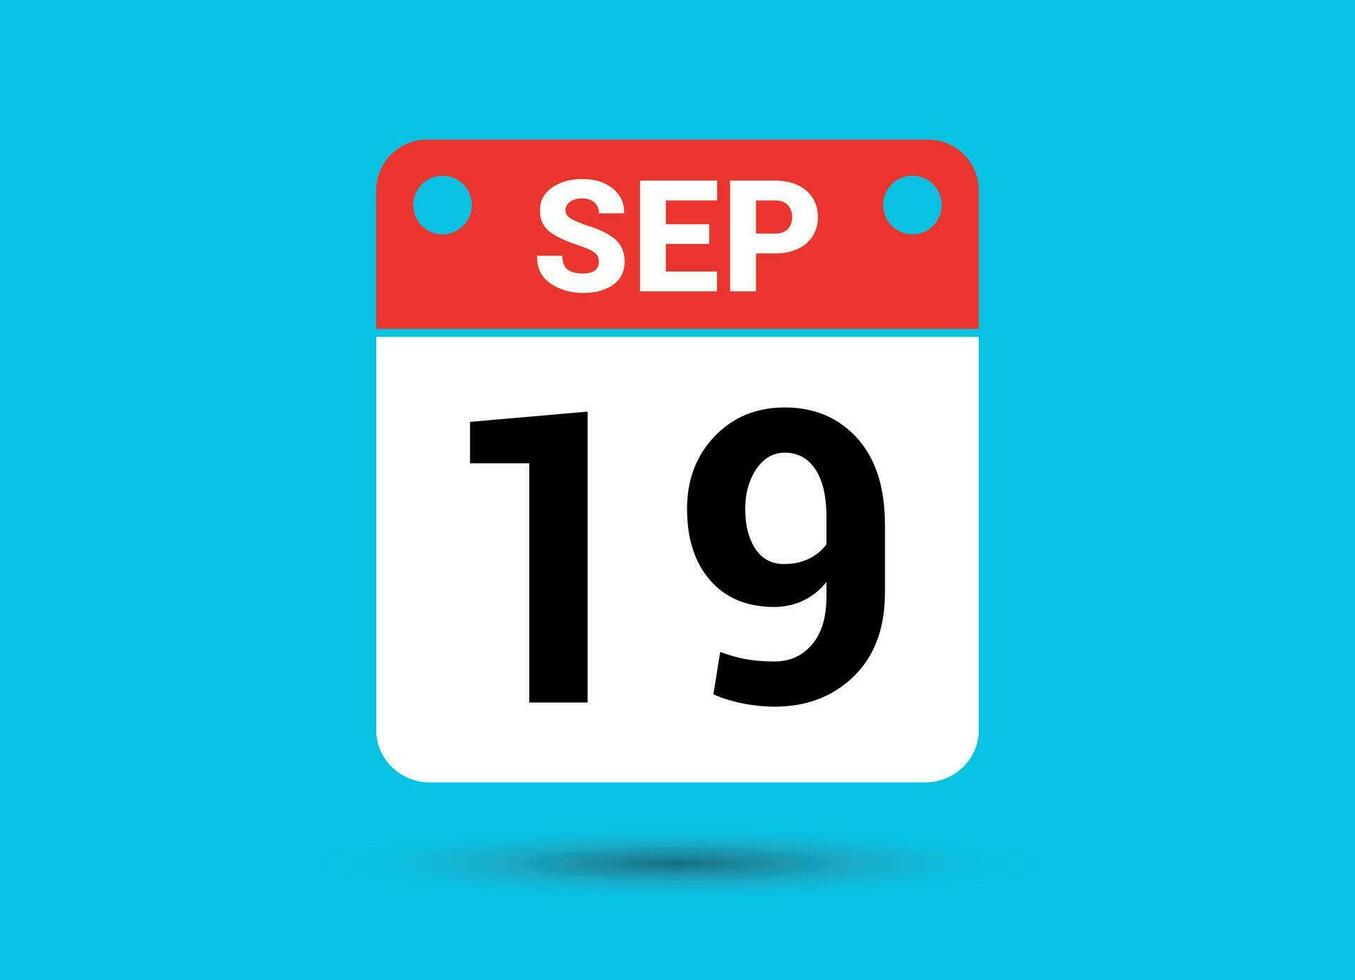 September 19 Kalender Datum eben Symbol Tag 19 Vektor Illustration